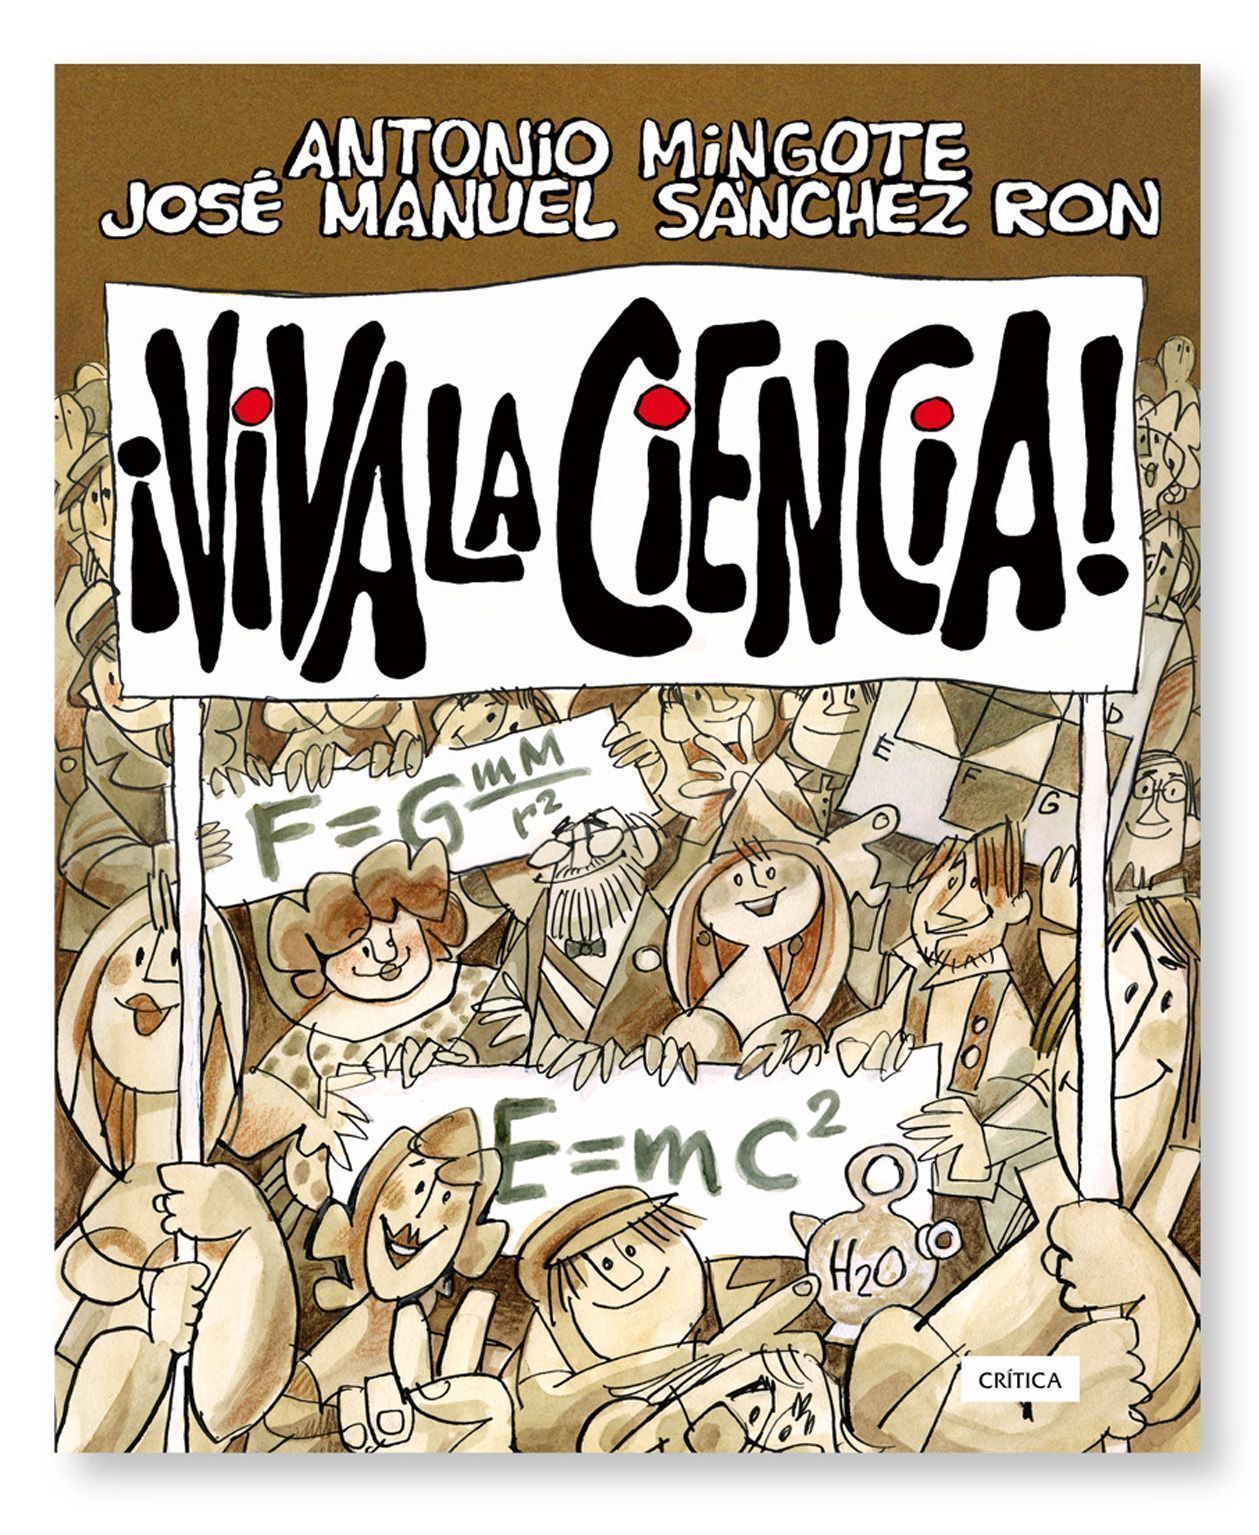 Viva la ciencia! . - Mingote, Antonio / Sánchez Ron, José Manuel